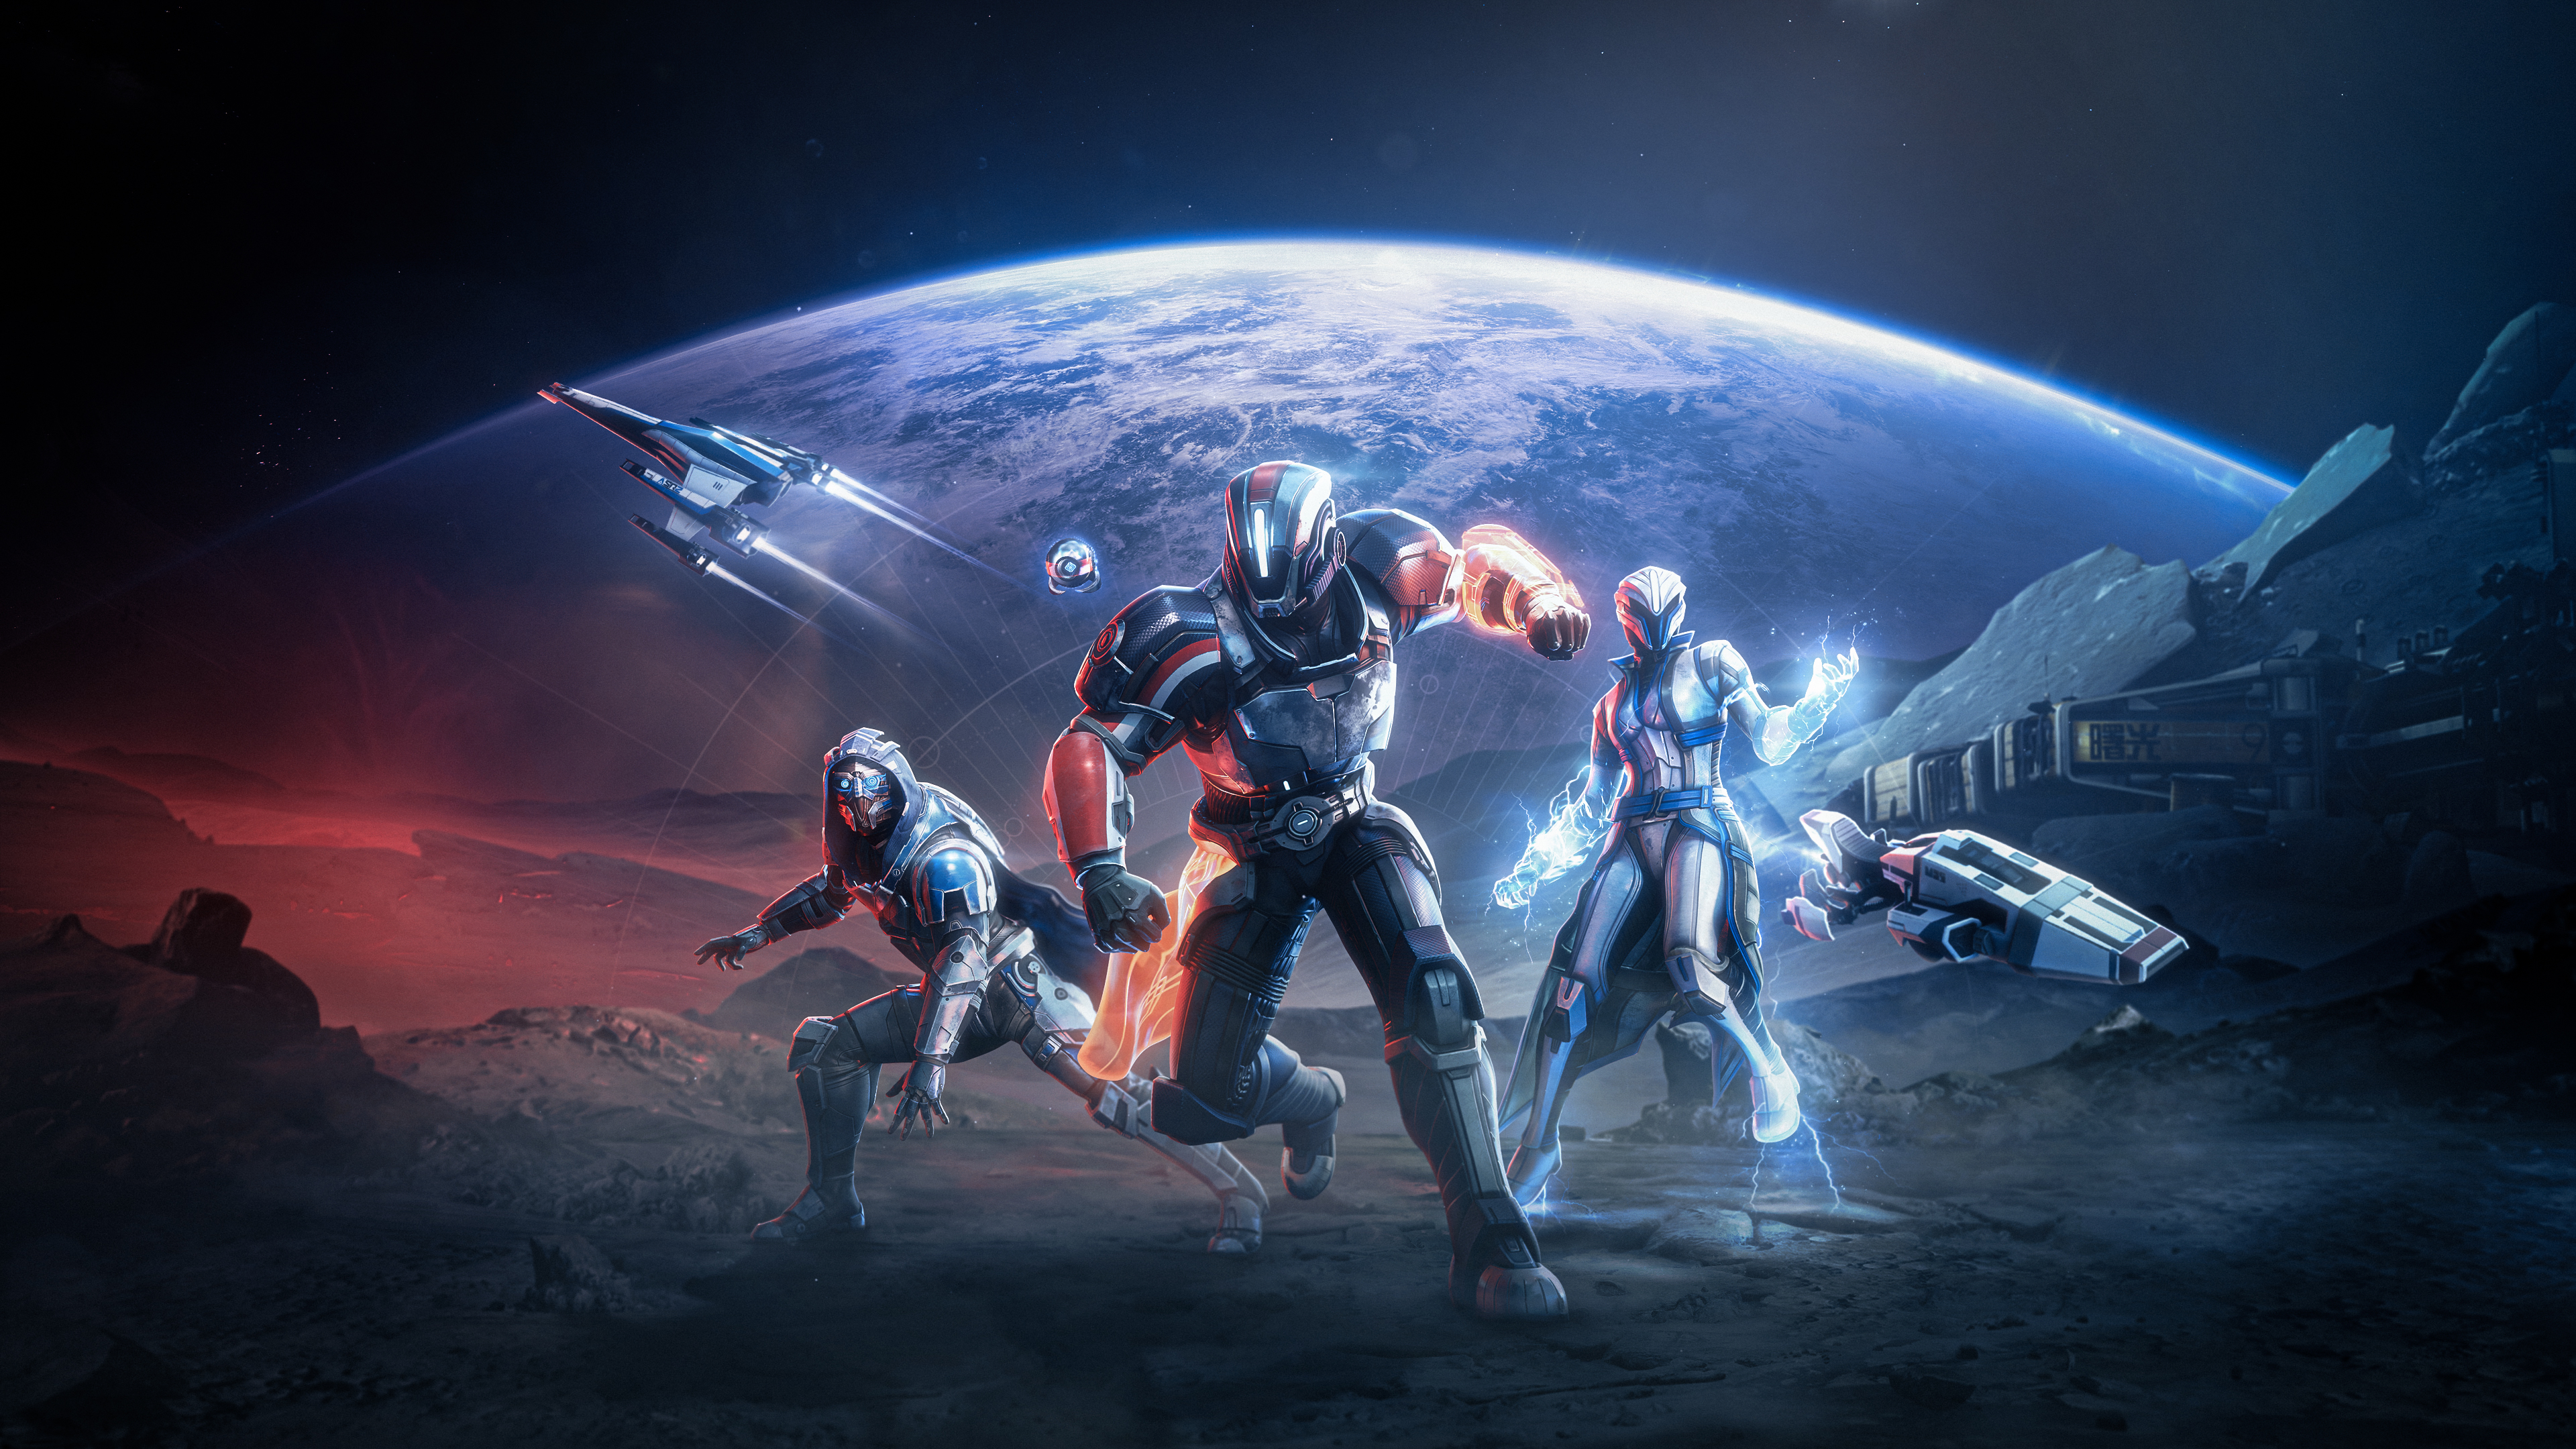 Destiny 2 Mass Effect armor sets - Hunter, Titan, and Warlock